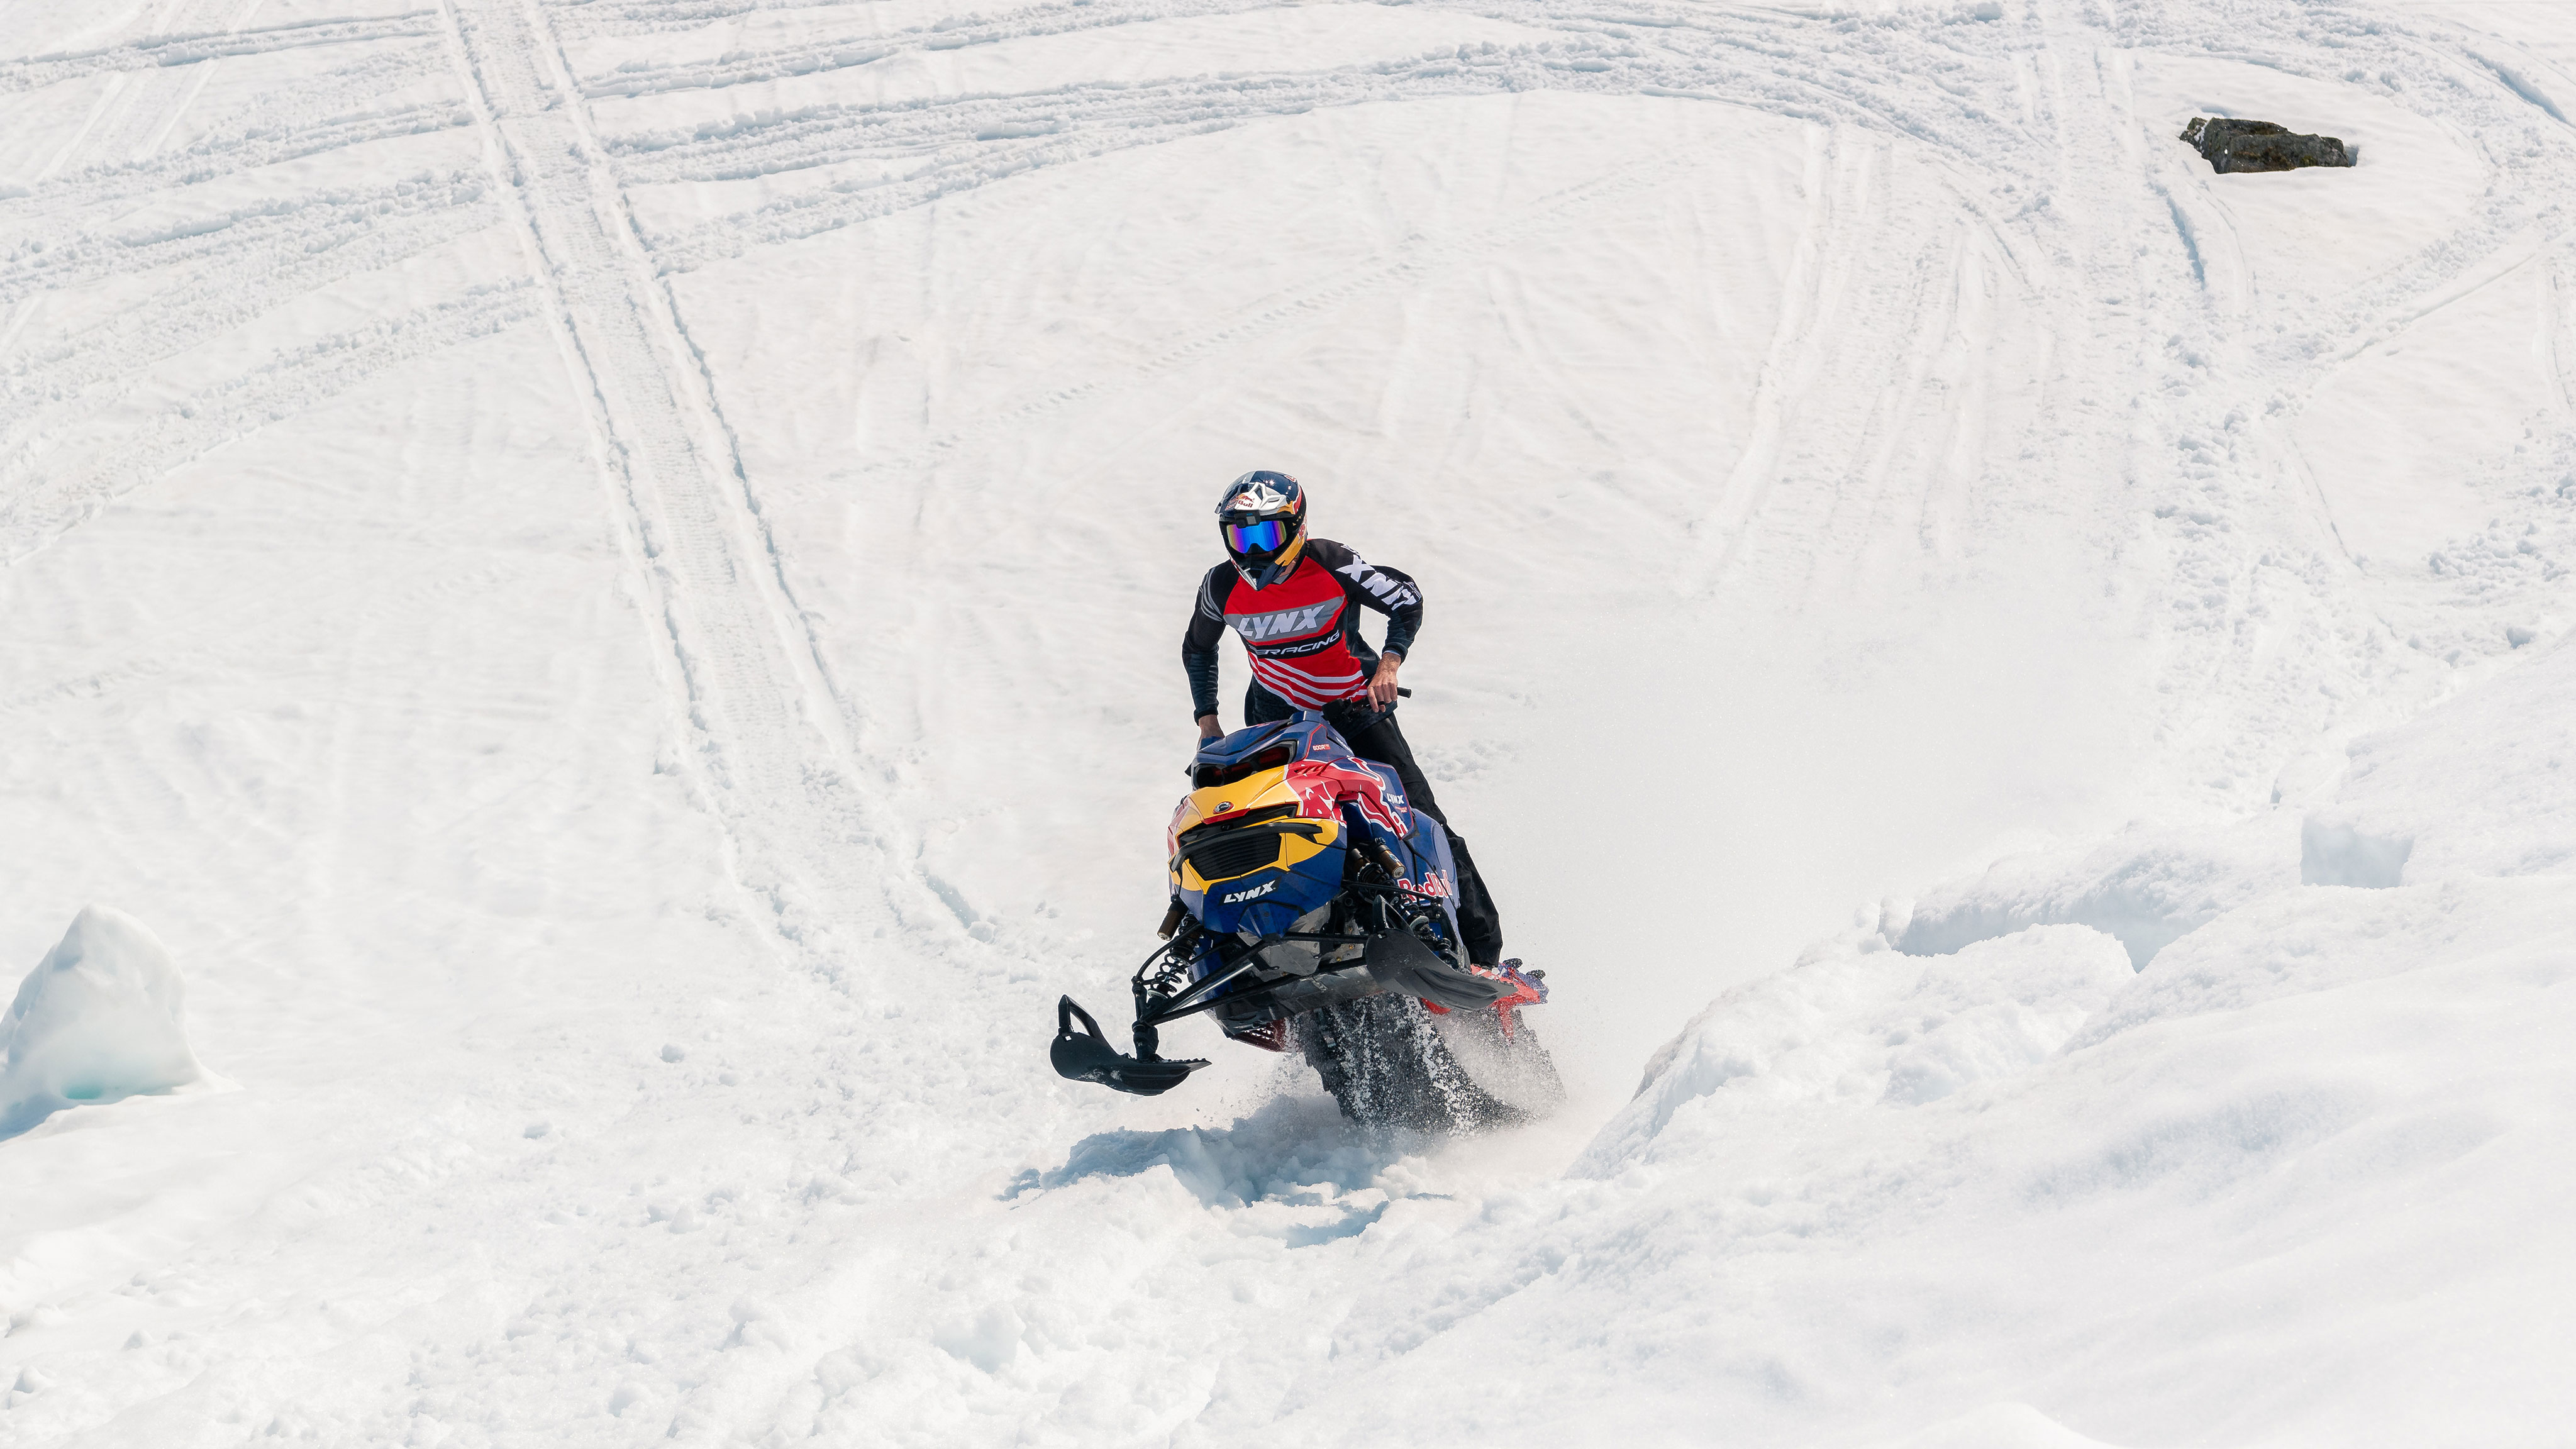 Andreas Bergmark on his Lynx snowmobile